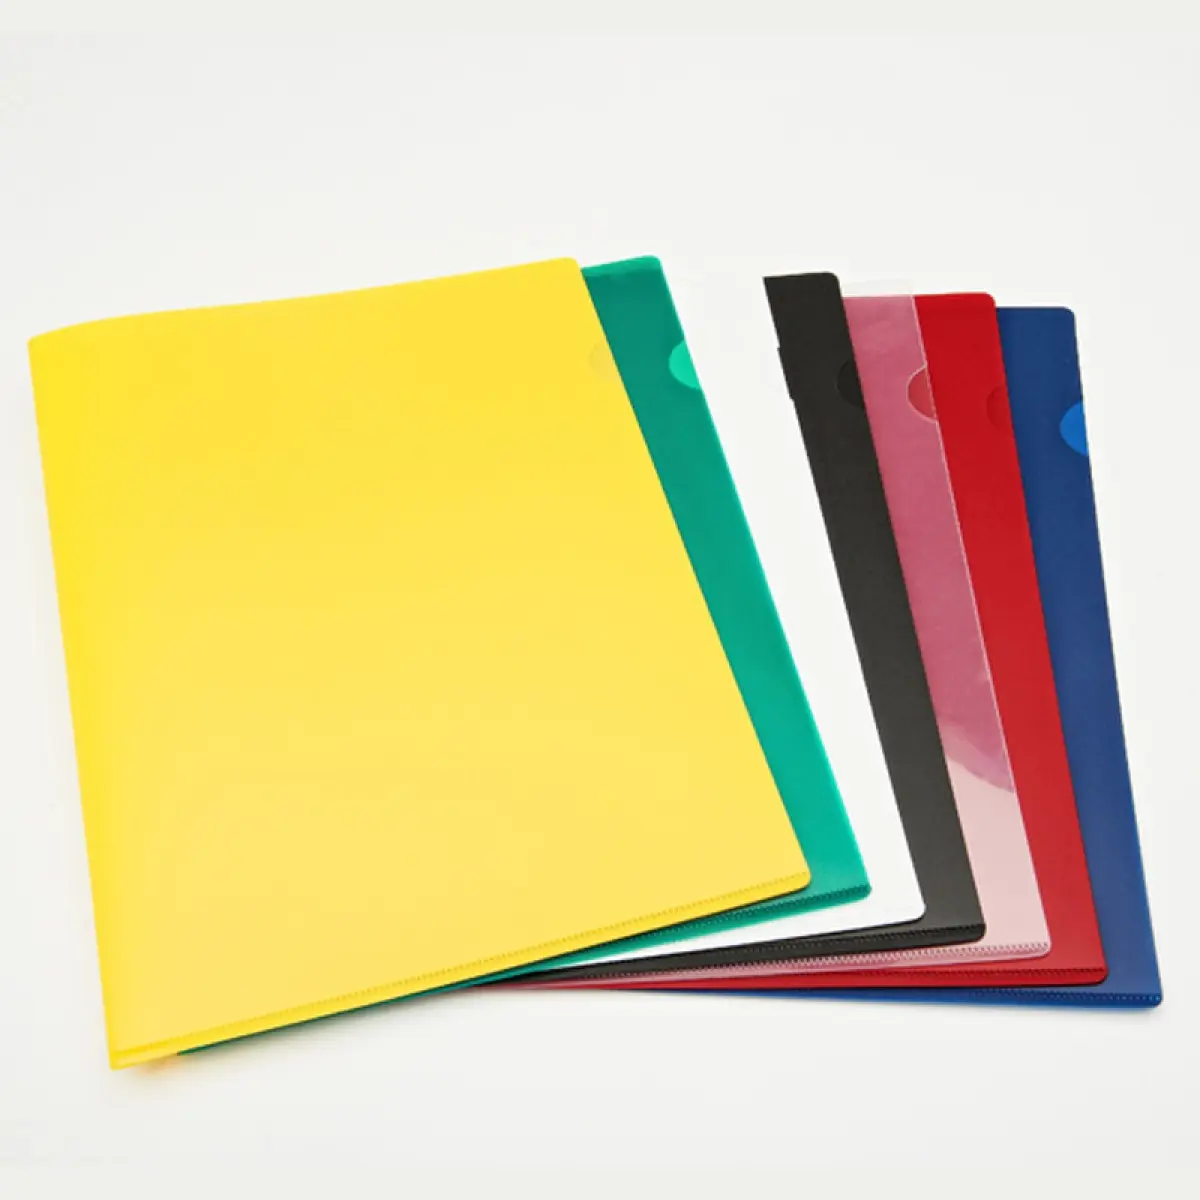 PVC Document Station ery Klarer und farbiger Cover Report Datei ordner Transparenter Kunststoff im Format A4 mit Schiebe leiste